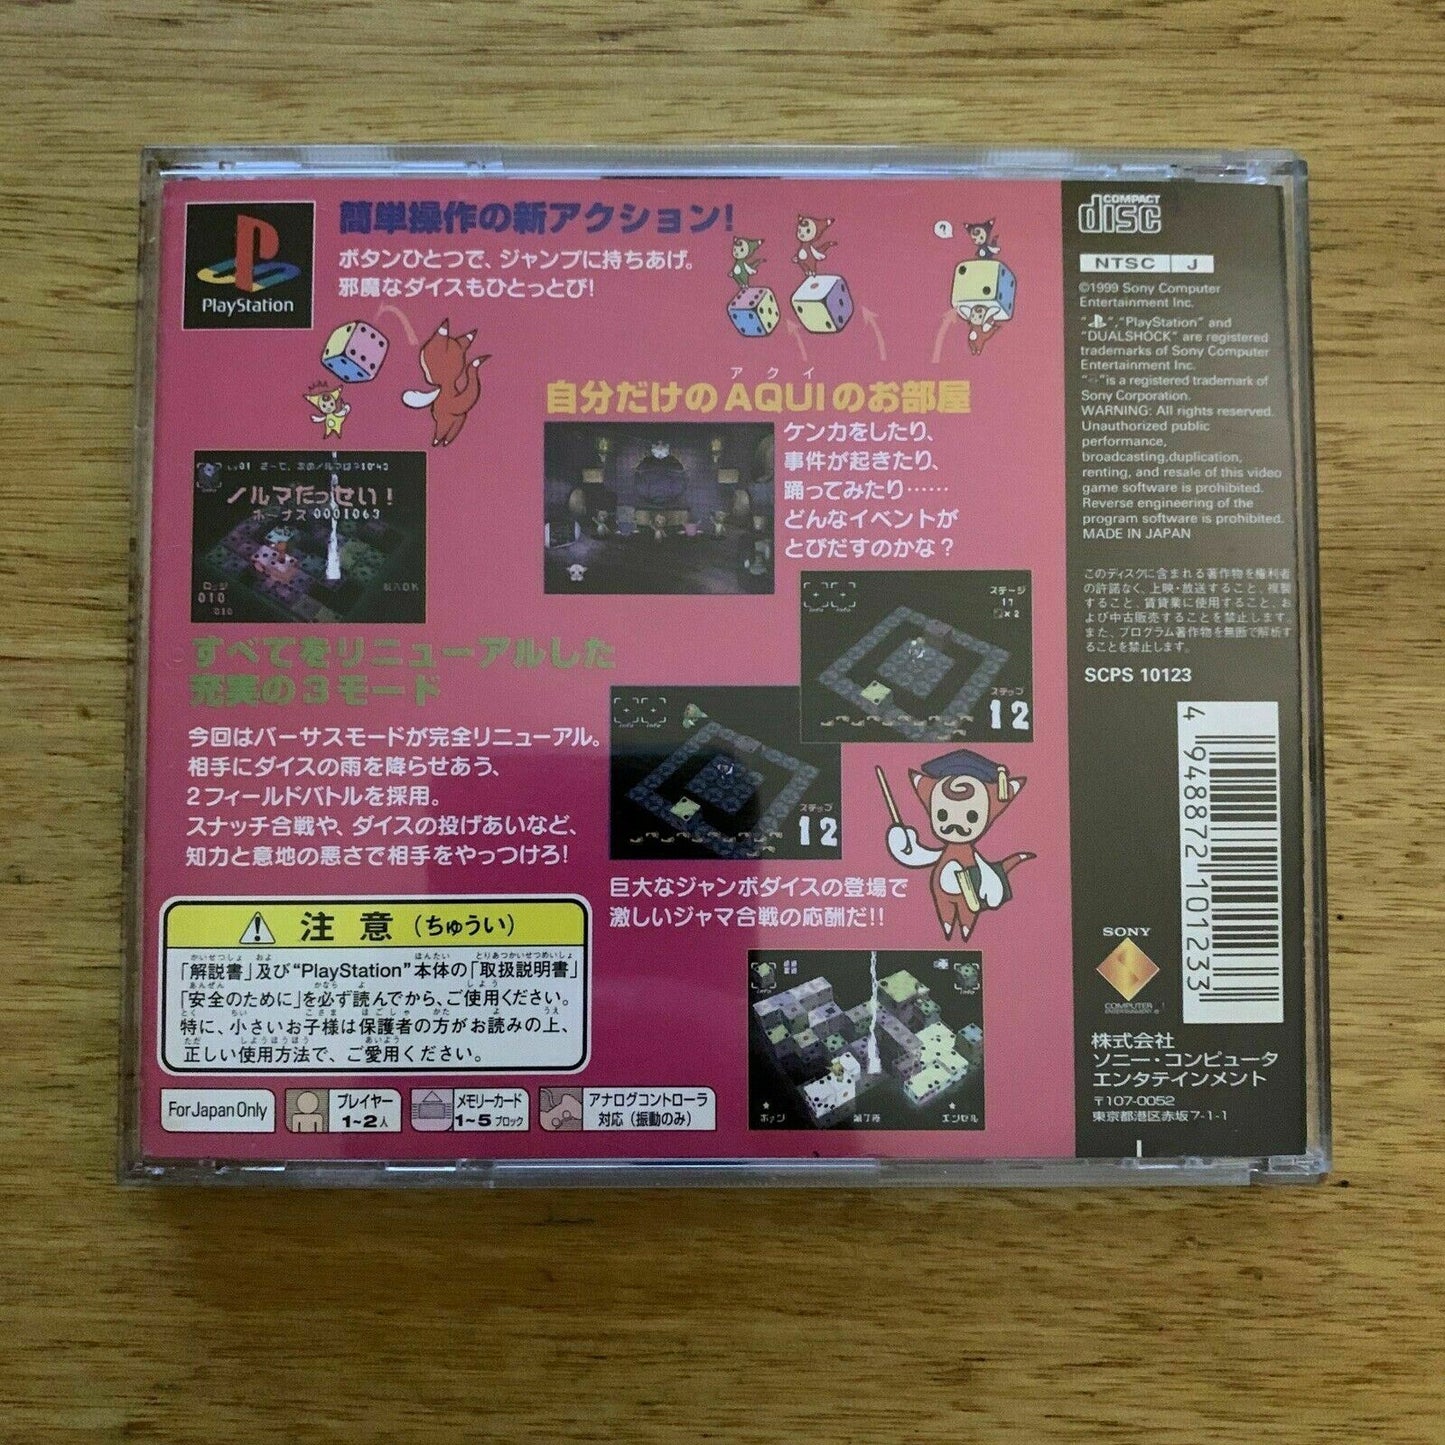 XI [sai] Jumbo - Sony Playstation PS1 NTSC-J Japan 3D Puzzle Action Game